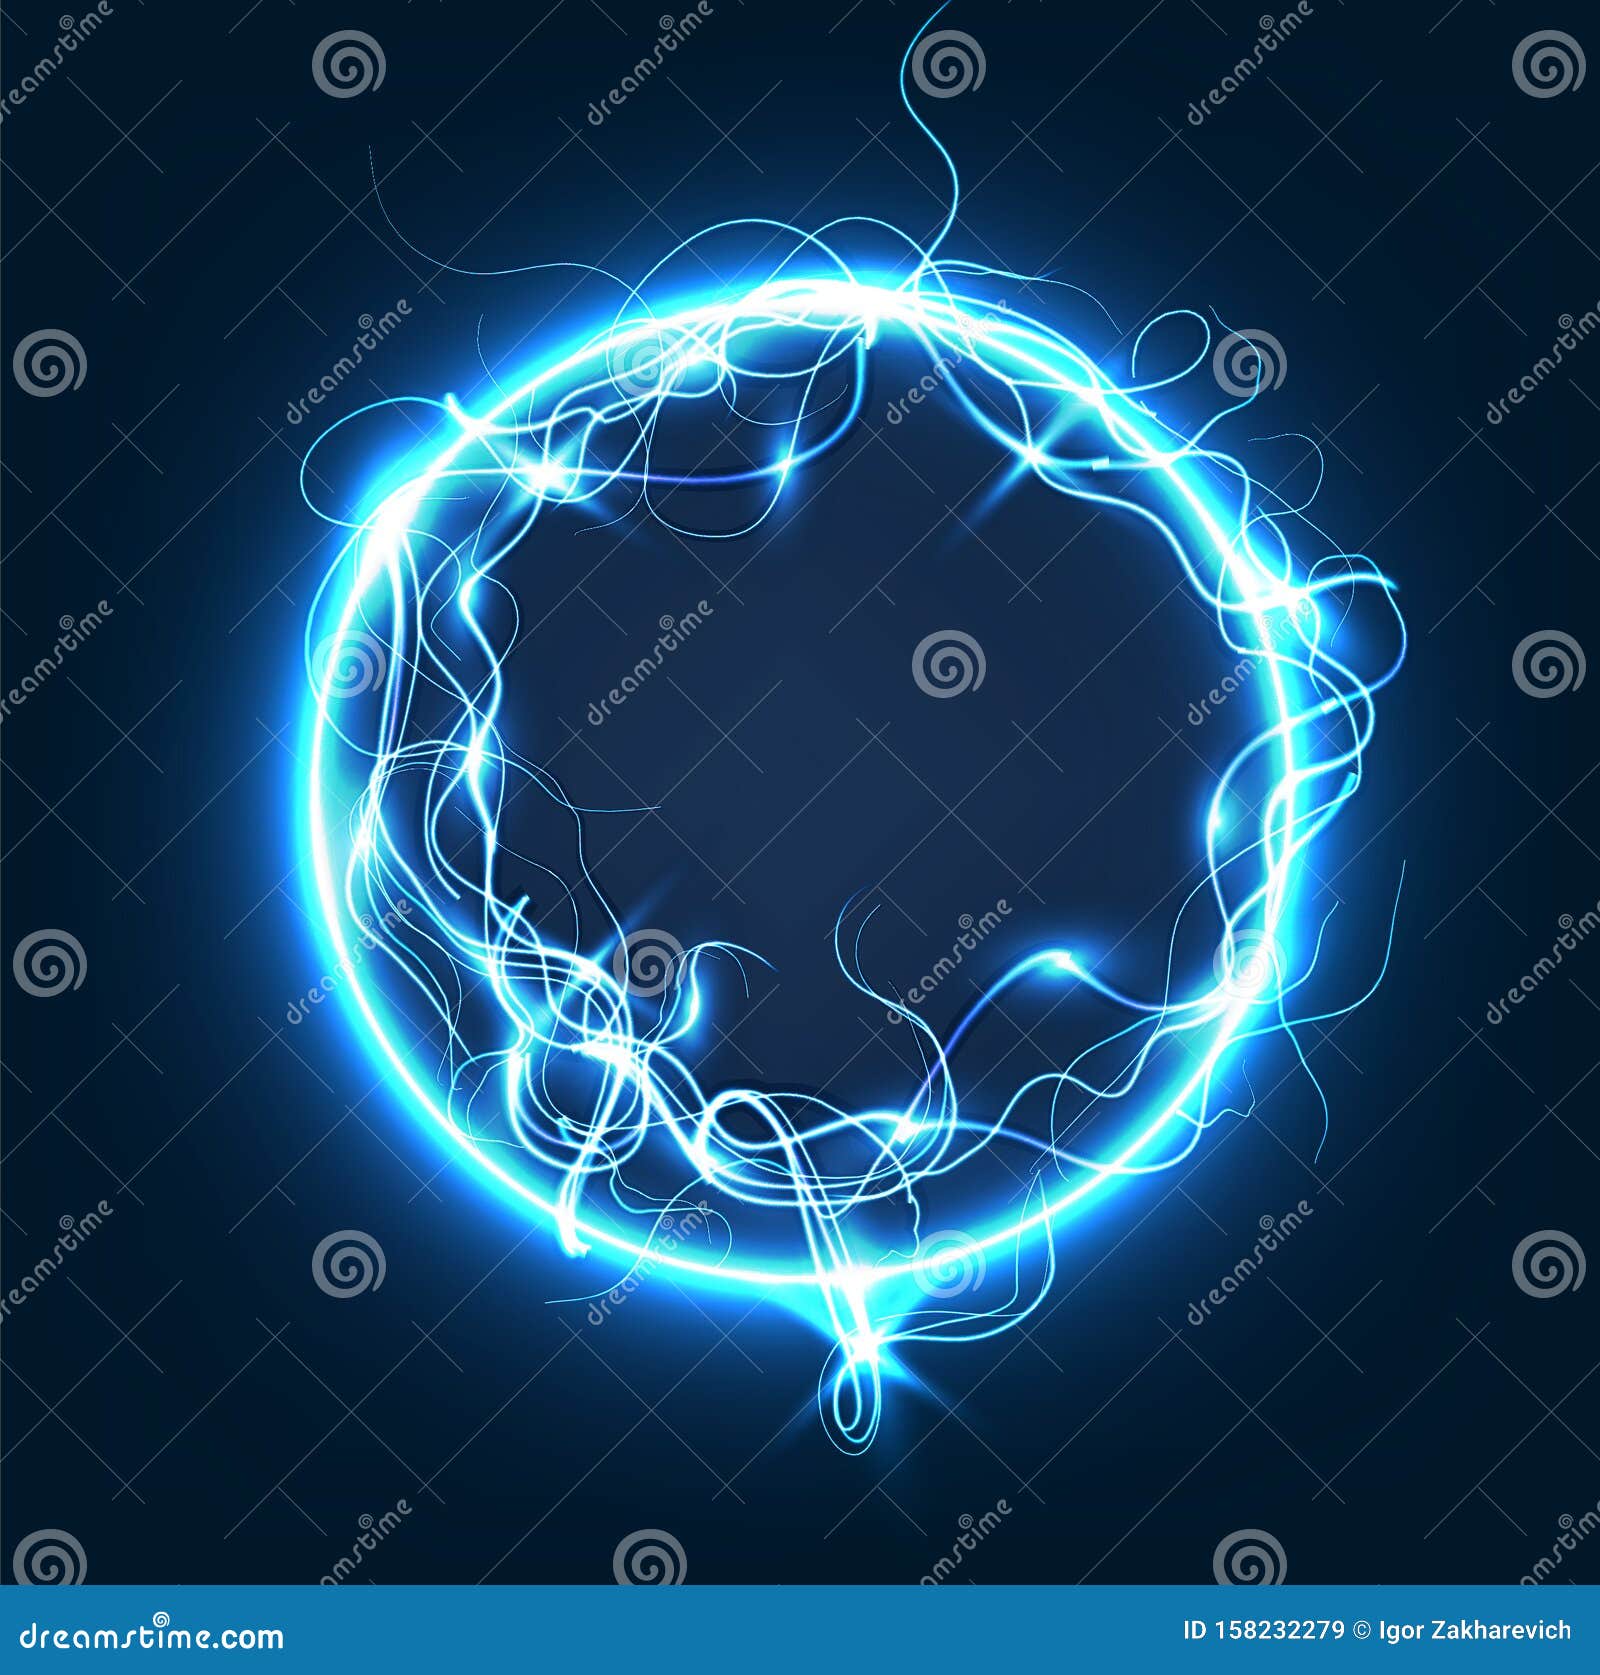 Tampa Bay Lightning Logo With Blue Light Radiation HD Tampa Bay